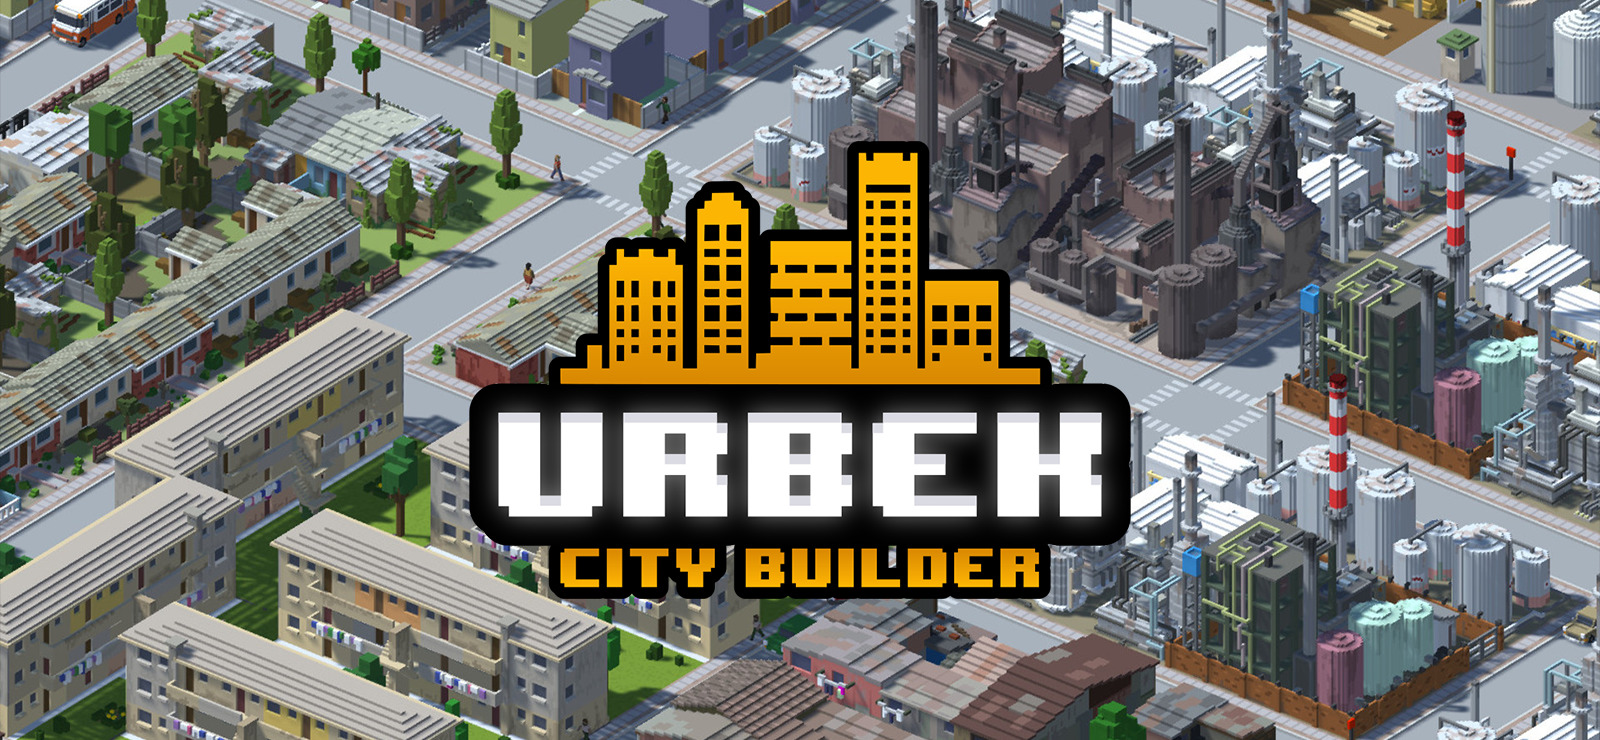 Compre Urbek City Builder (PC) - Steam Key - GLOBAL - Barato - !